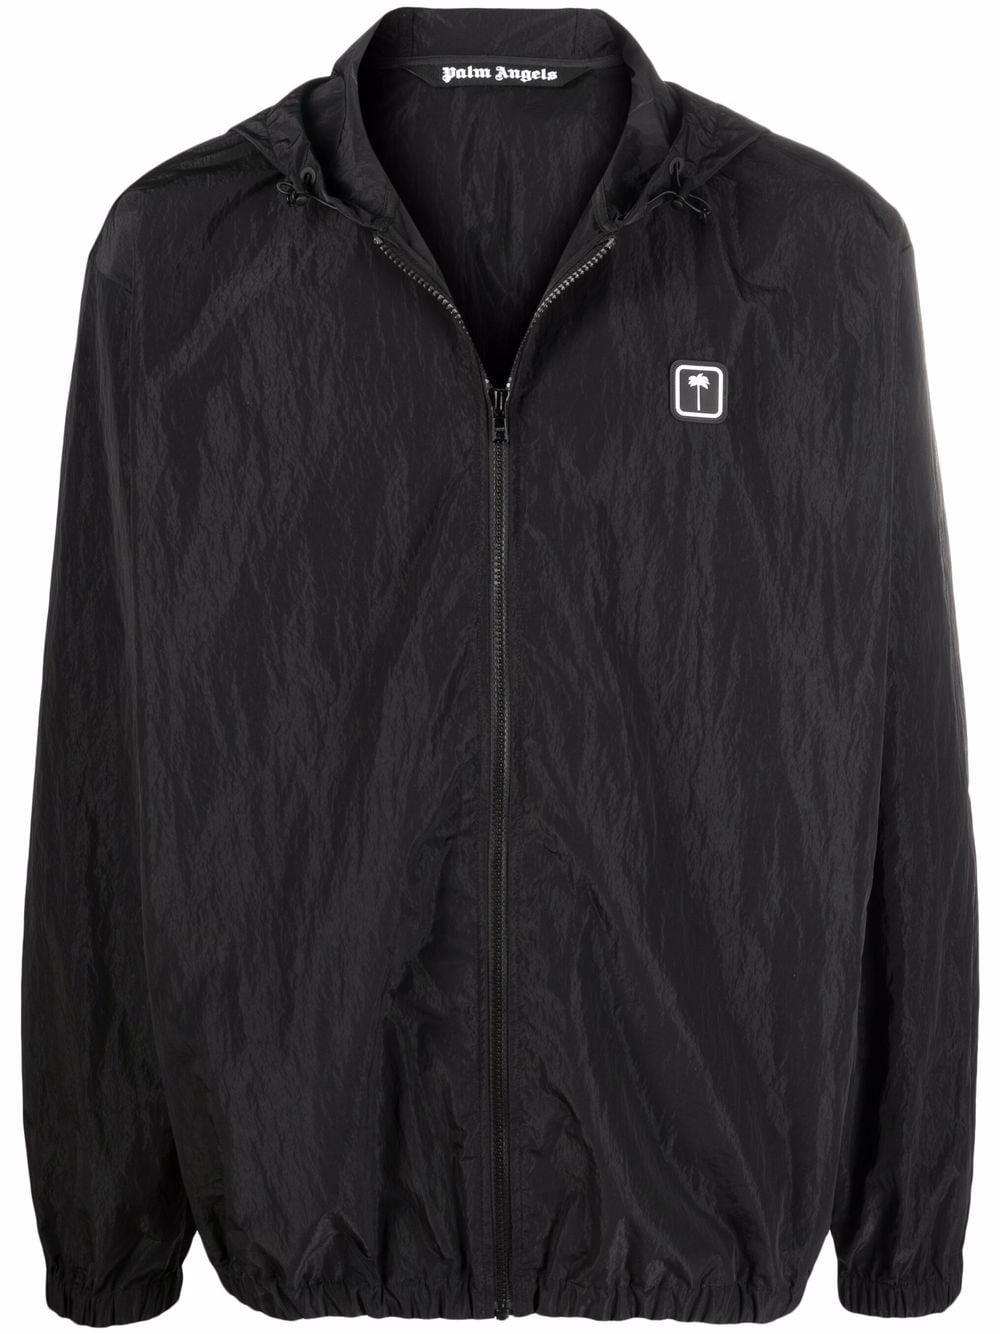 Palm Angels PXP hooded windbreaker jacket - Black von Palm Angels